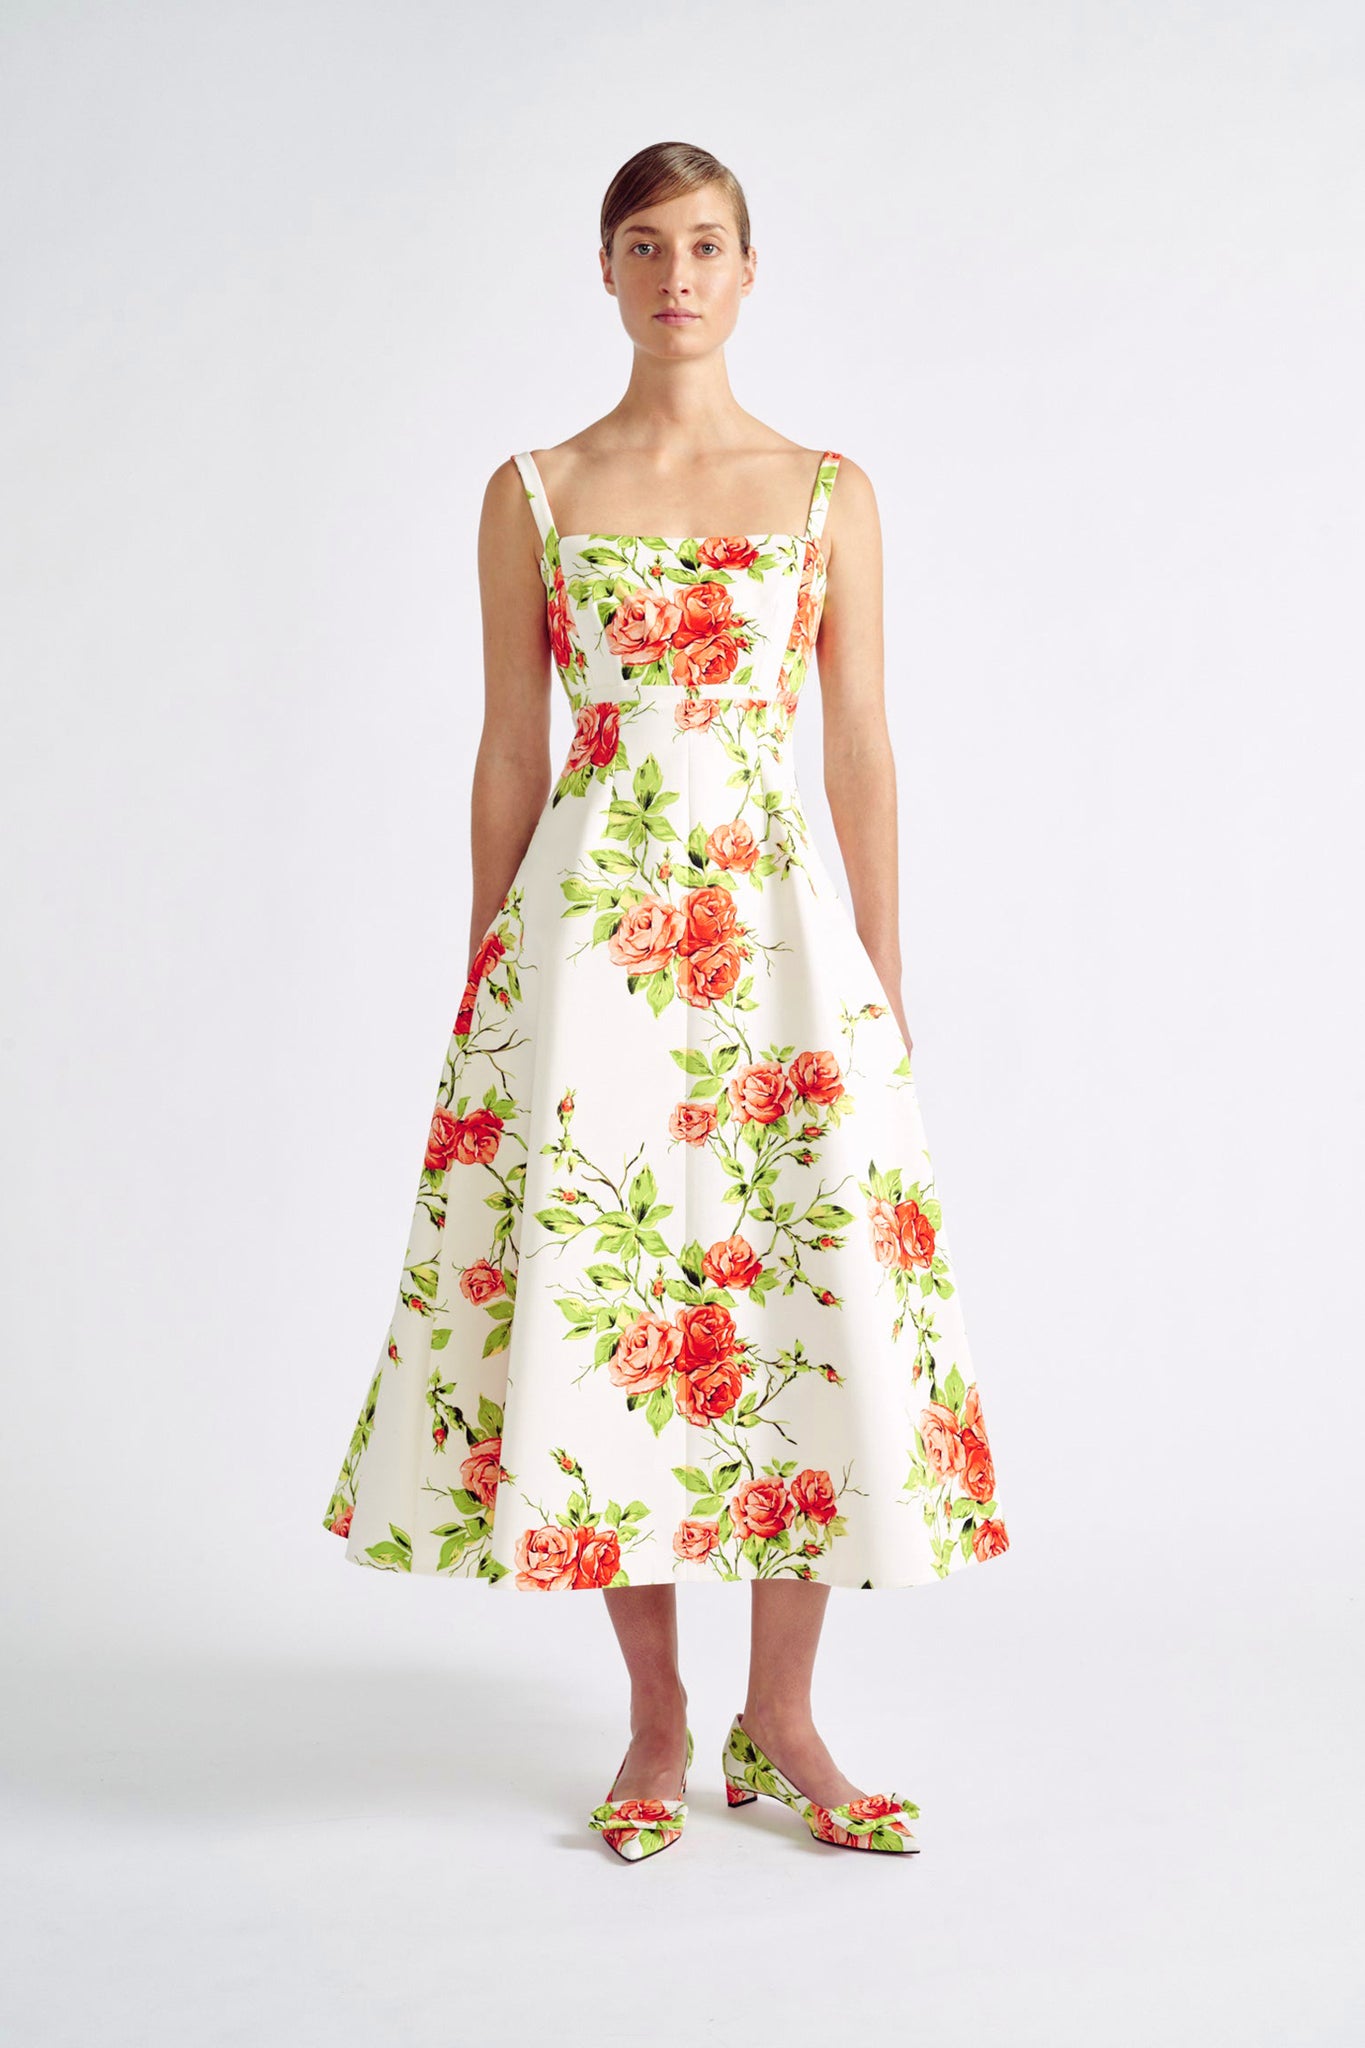 Felipe Dress | Orange Rose Floral Printed Fit-And-Flare Dress | Emilia Wickstead